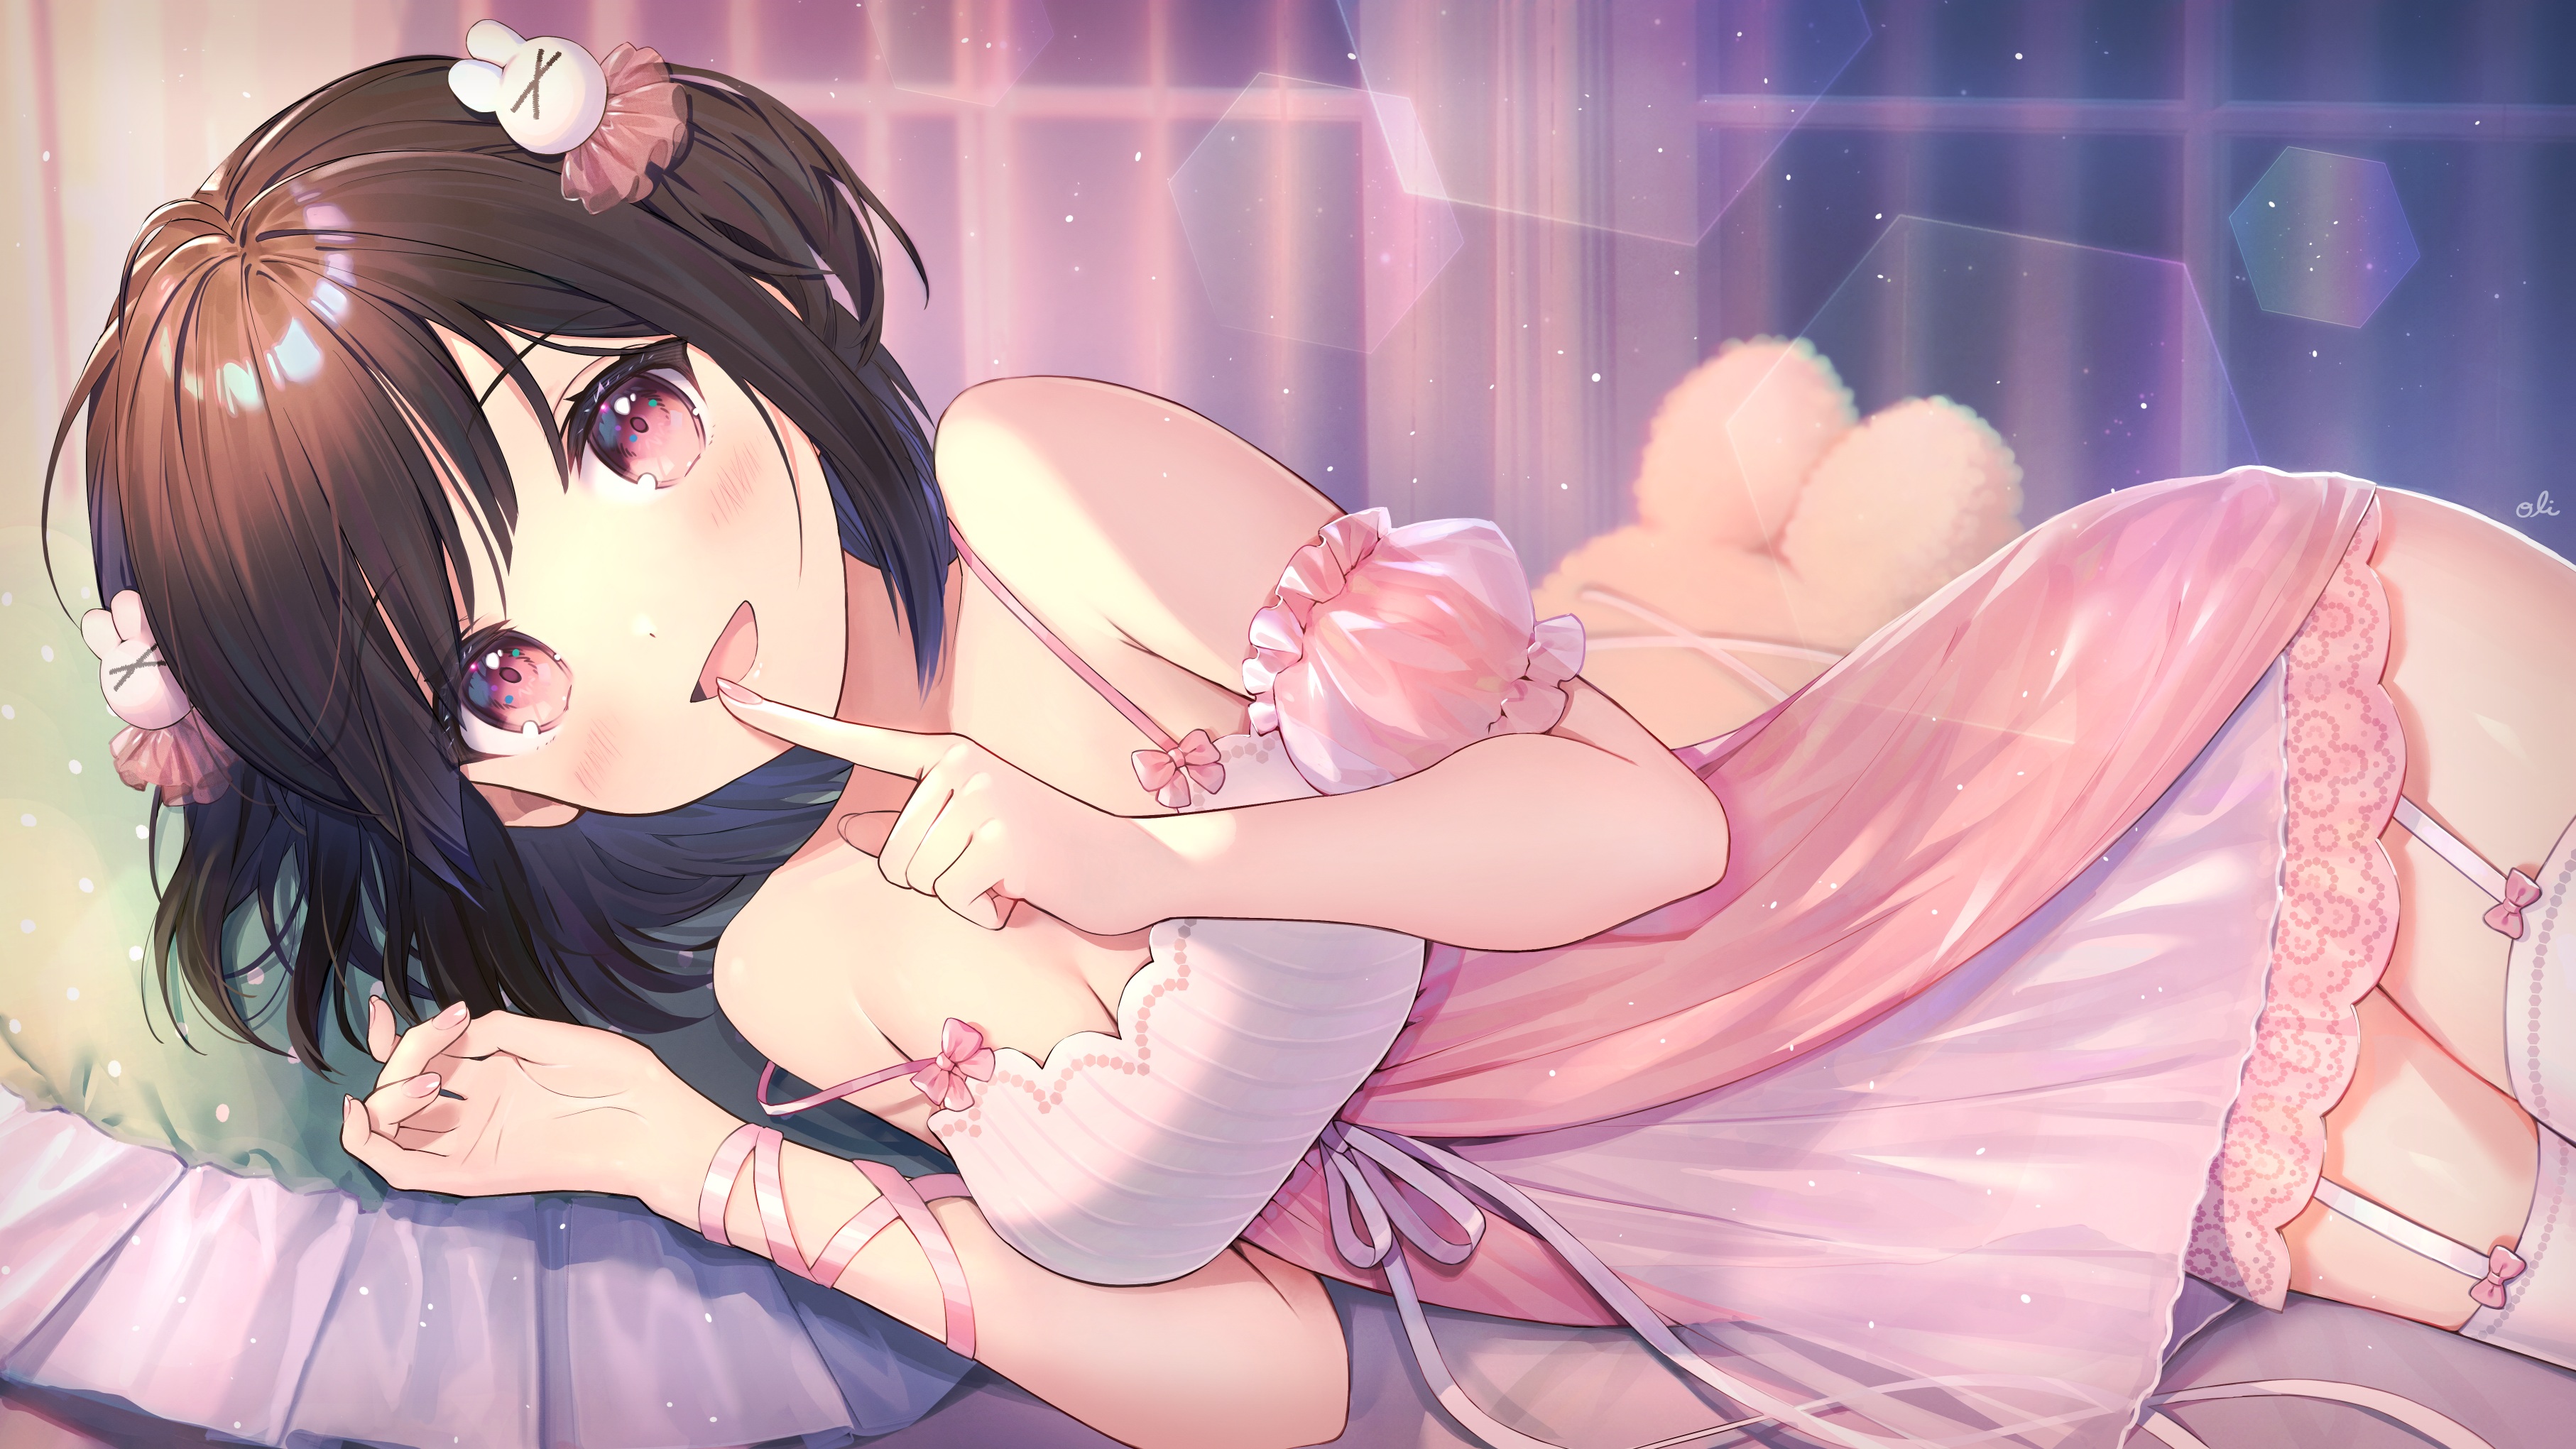 Anime 3628x2041 anime anime girls Oli (artist) artwork brunette pink eyes in bed lying on side nightgown thigh-highs